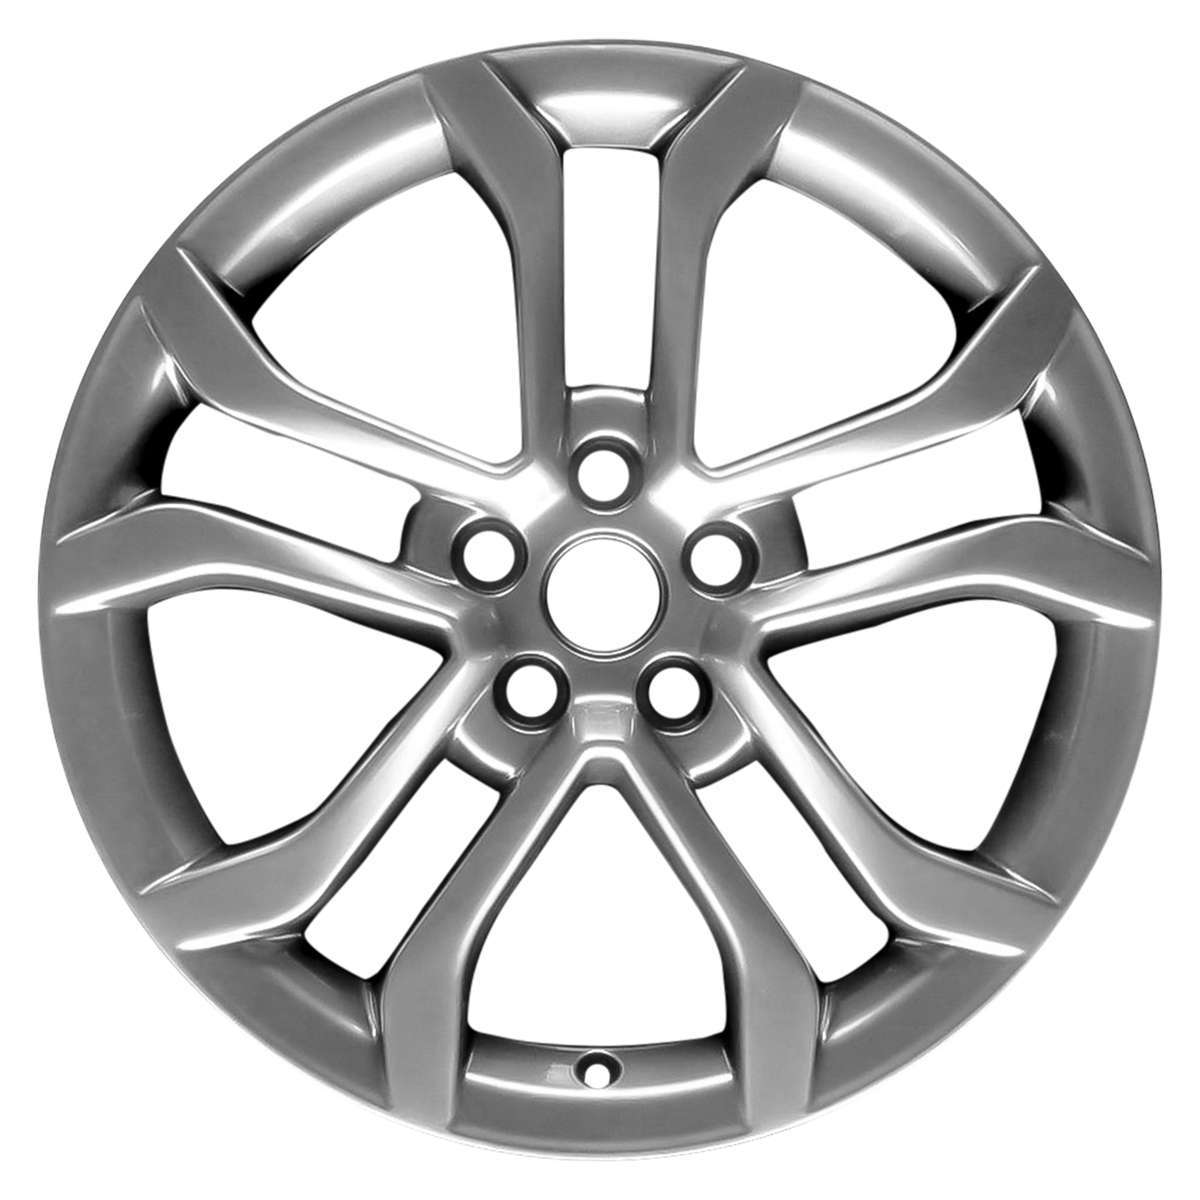 2018 Ford Fusion 18" OEM Wheel Rim W10120S